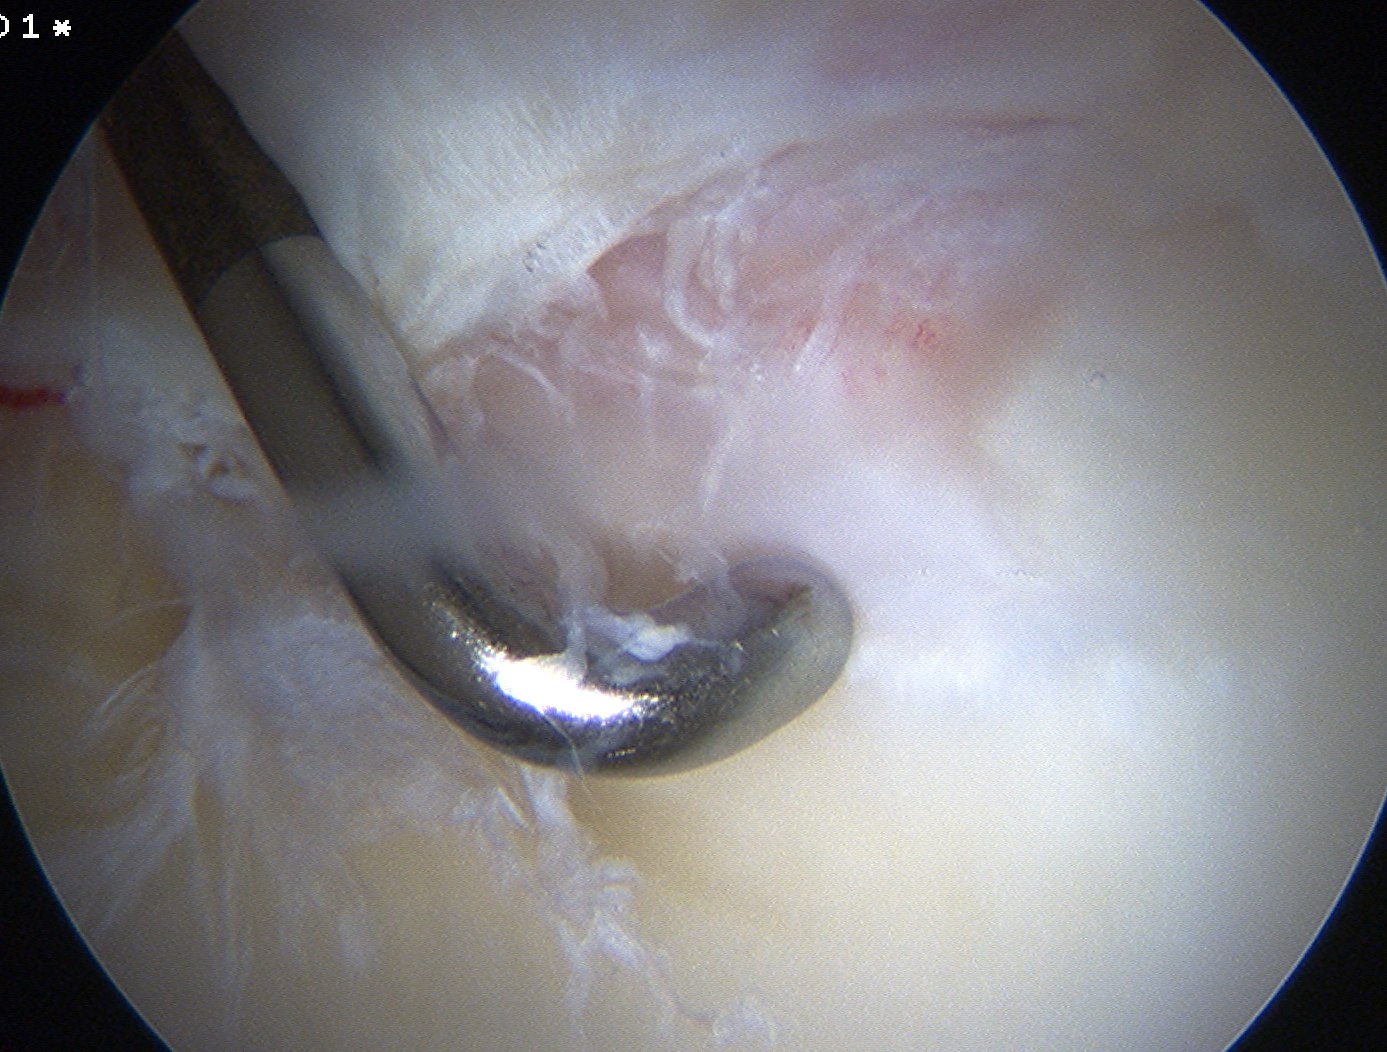 Hip Arthroscopy Degenerative Labral Tear From CAM lesion